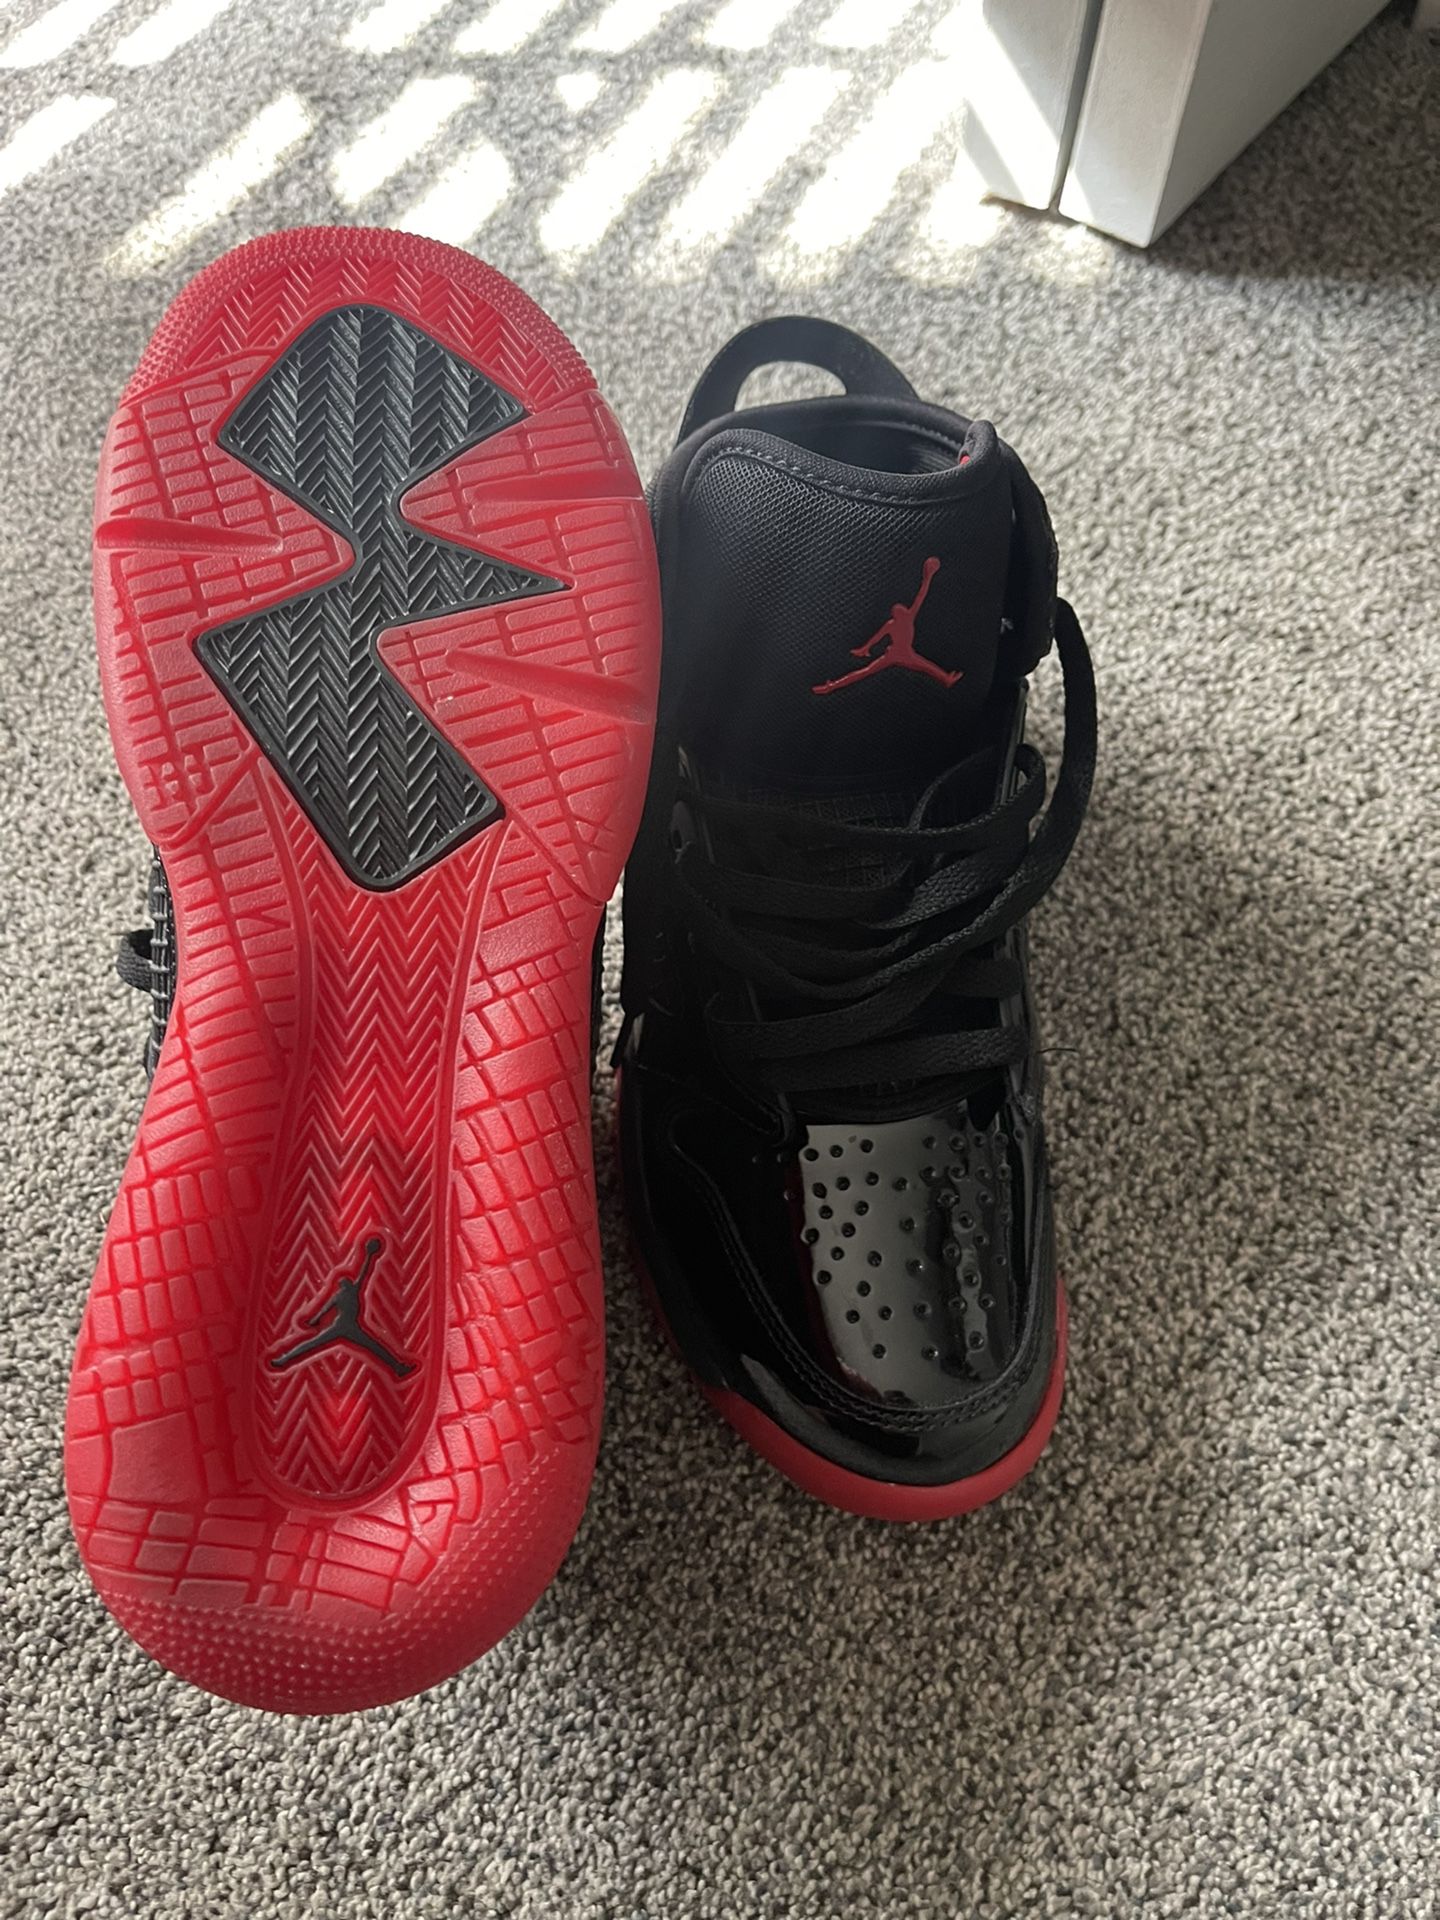 Jordan Basketball /tennis Shoes Size 6 Y